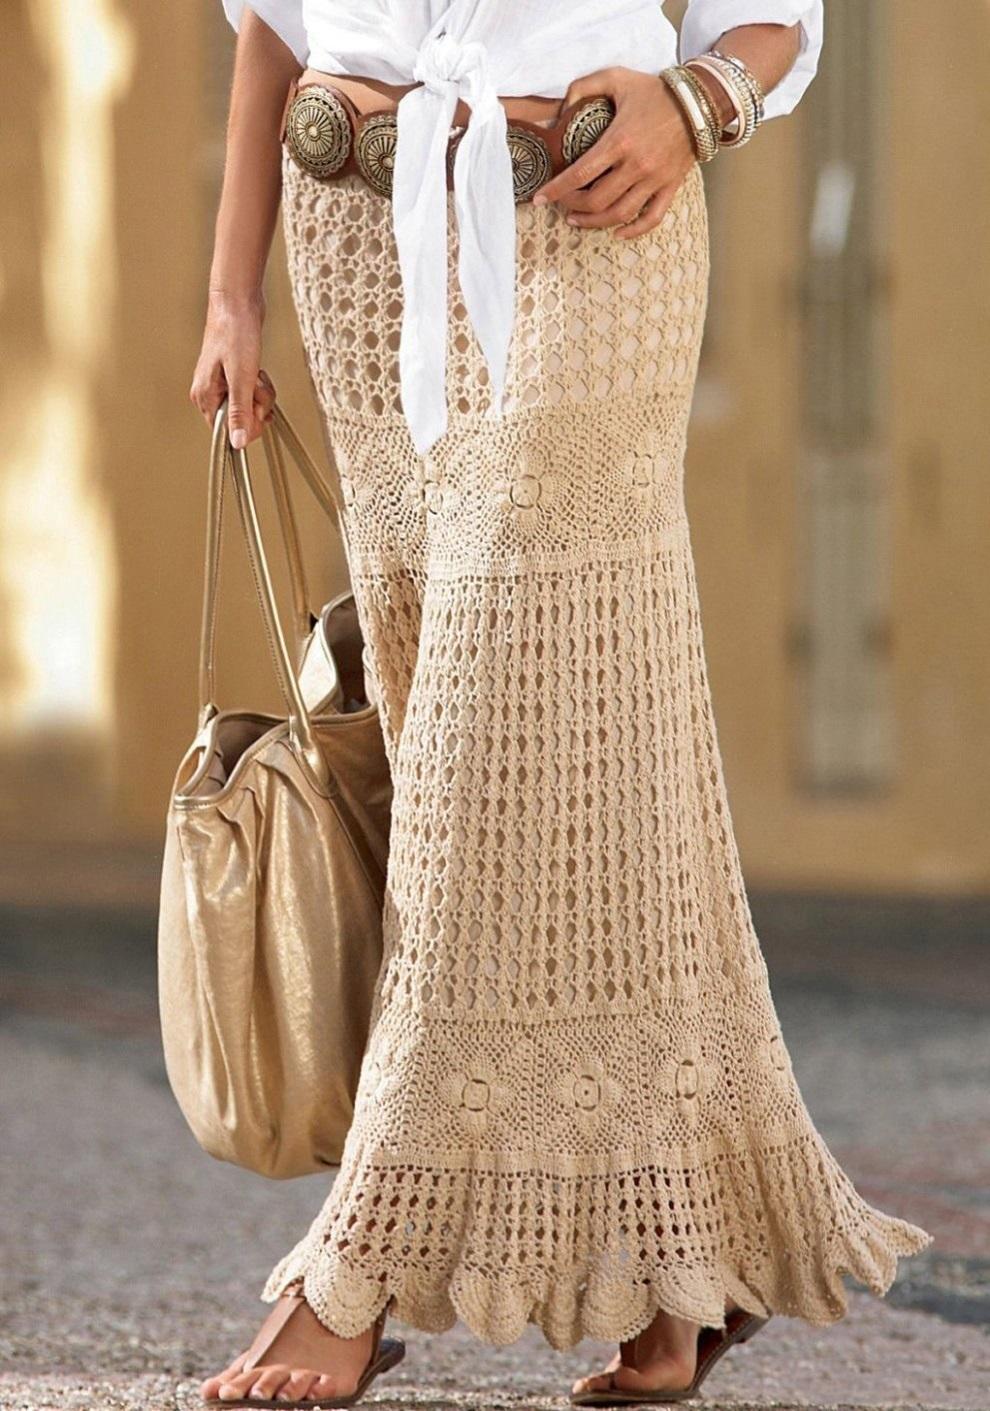 EMINENCE: Skirt Crochet Pattern – Crochet Tutorial in English -  conceptcreative.store